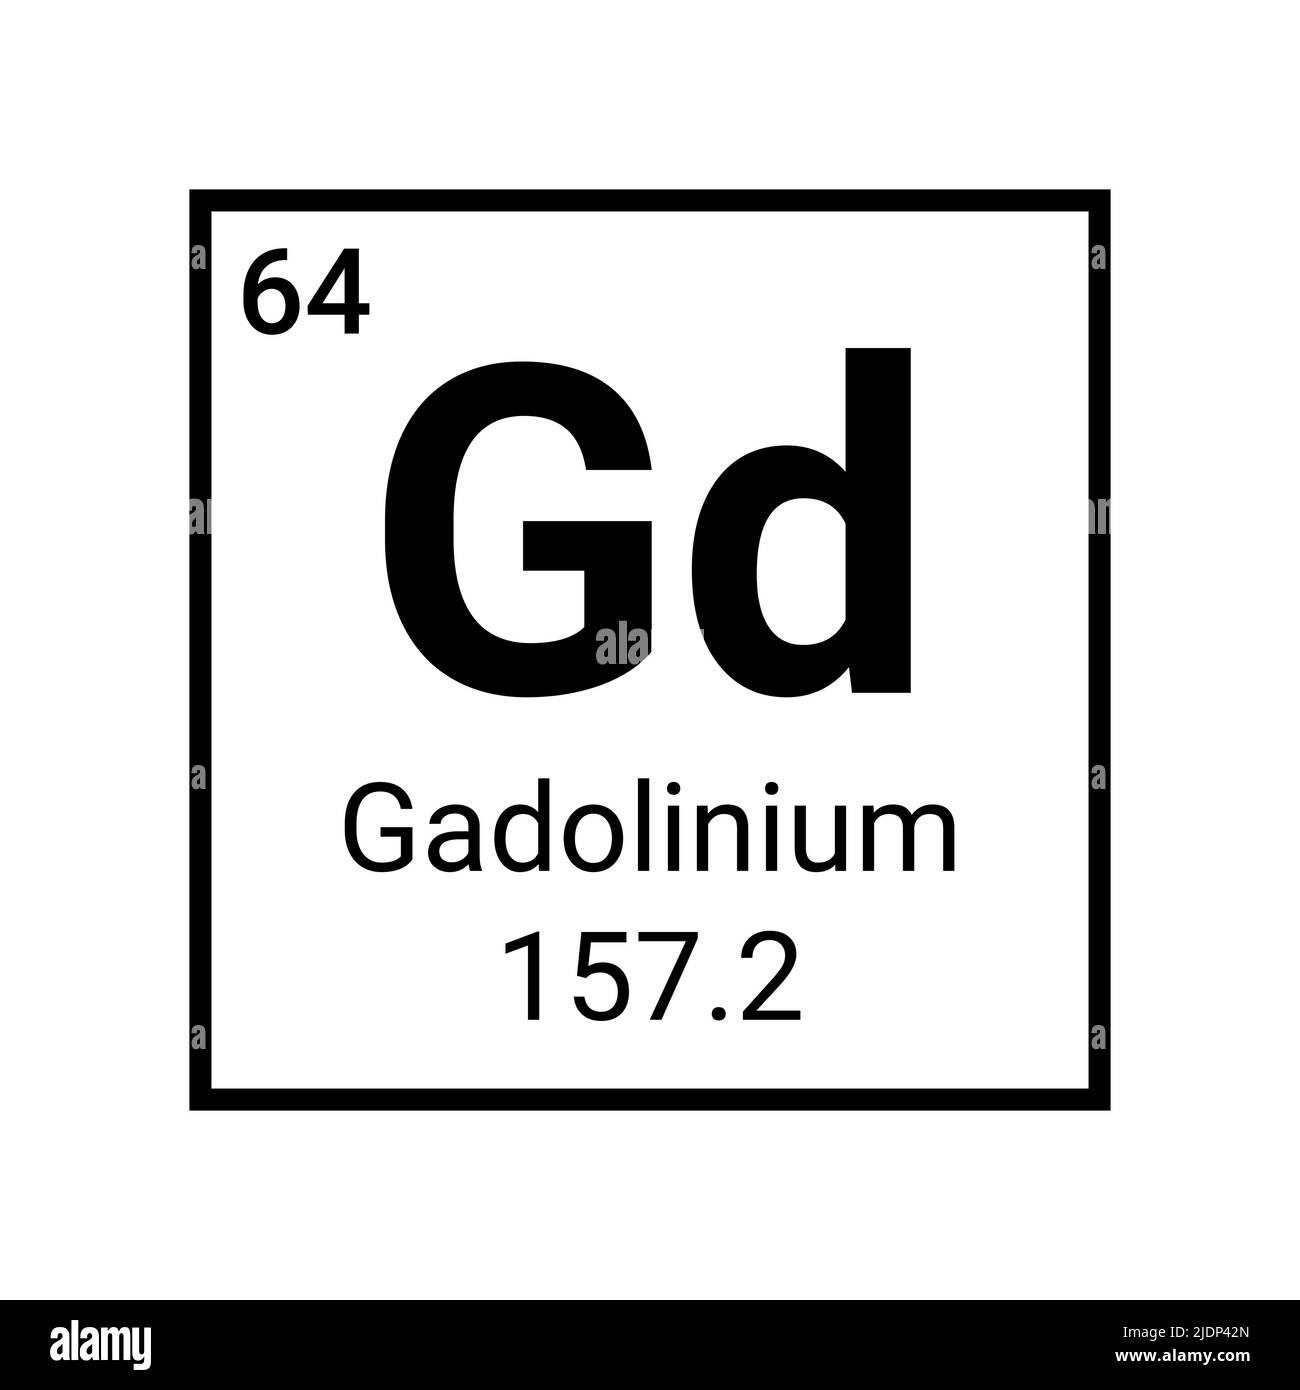 Gadolinium periodic table element chemistry icon atom. Stock Vector